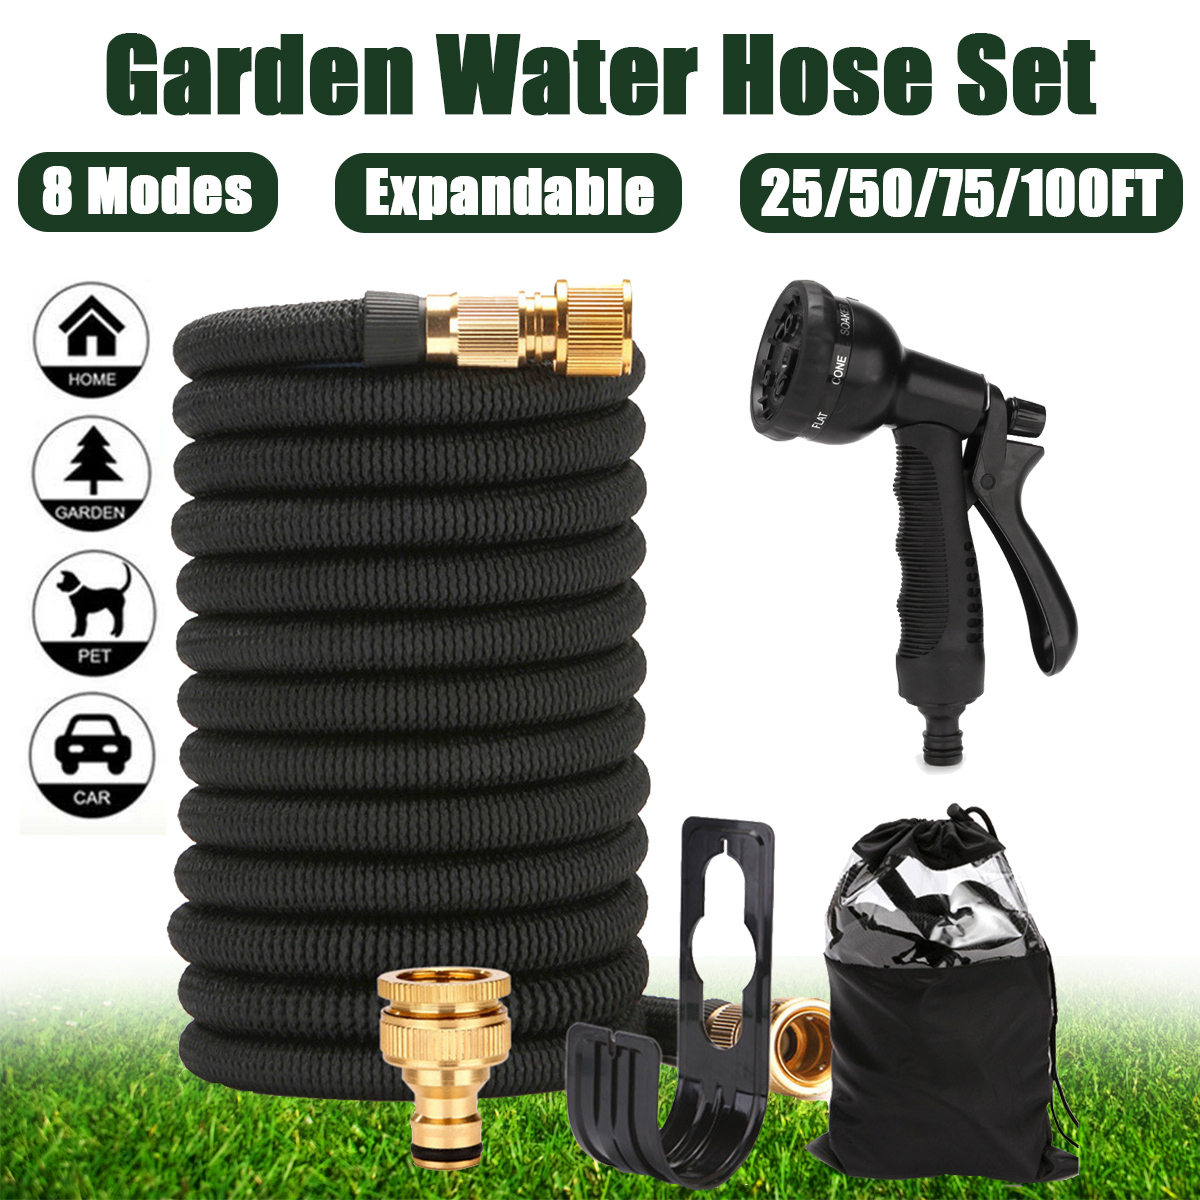 Stronger-Deluxe-Expandable-Flexible-Garden-Water-Hose-Set-255075100ft-1768264